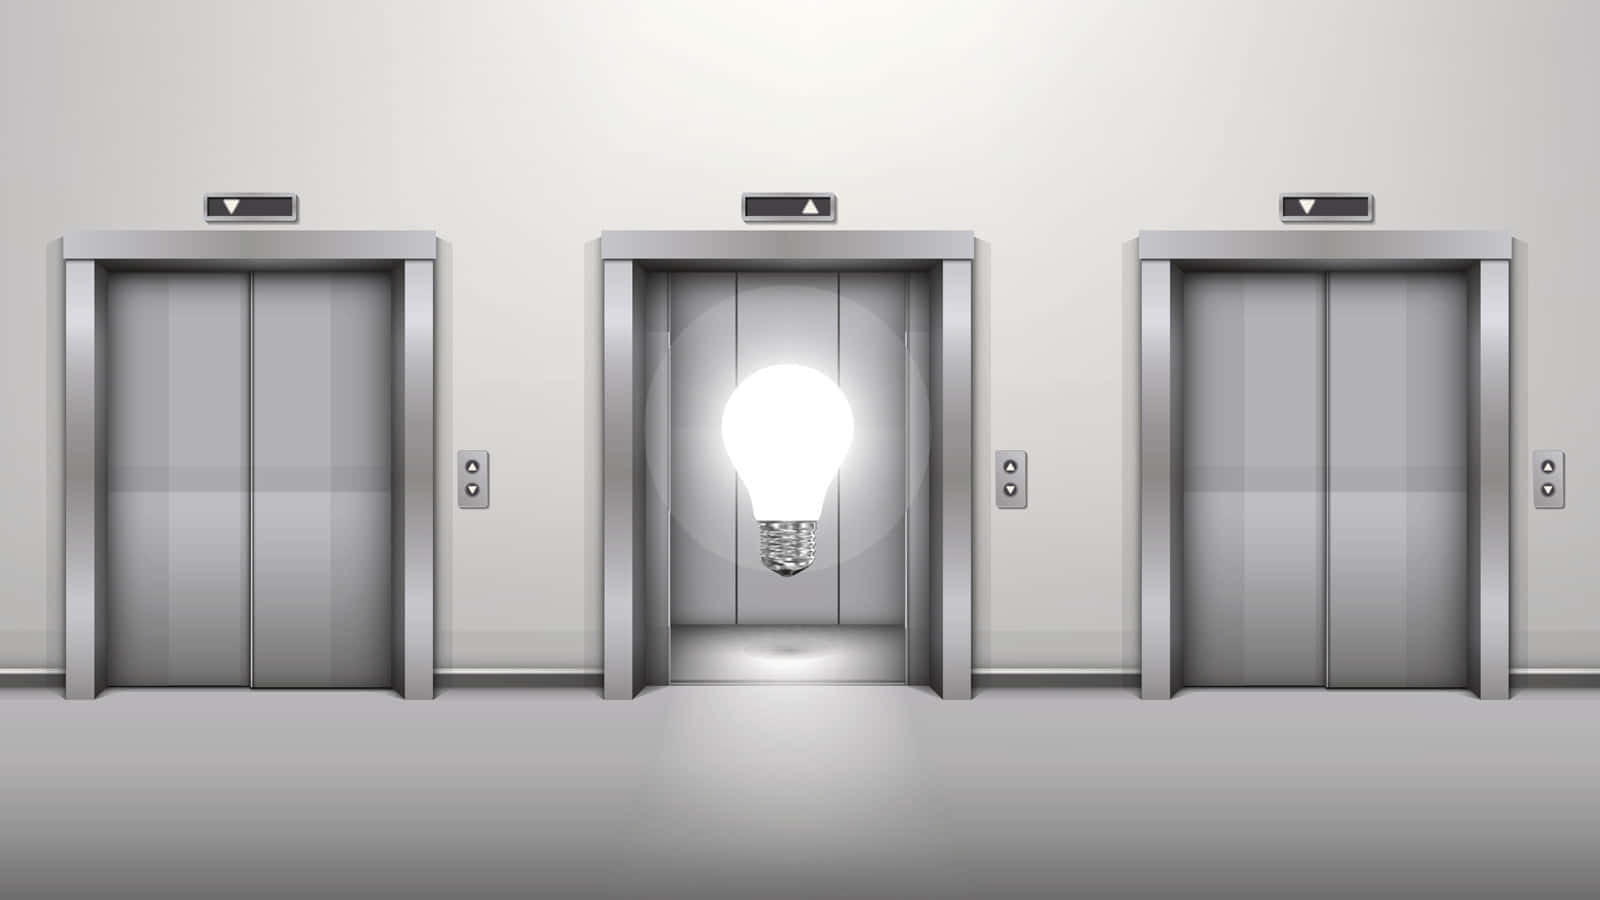 Three Elevators With Light Bulbs In Them